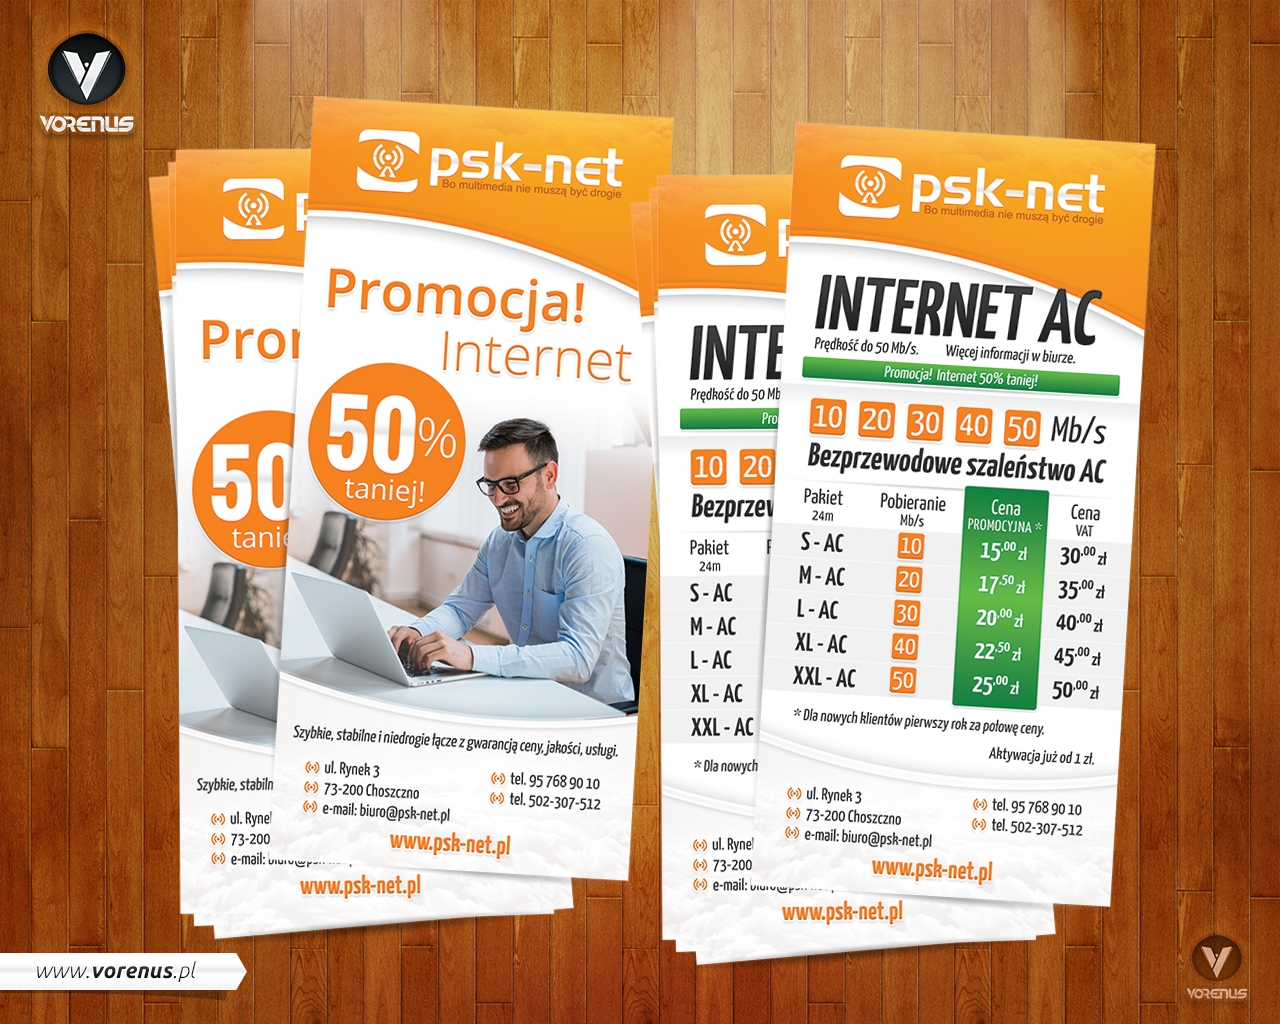 PSK-NET Kampania reklamowa 2018 Promocja Internet -50 procent taniej